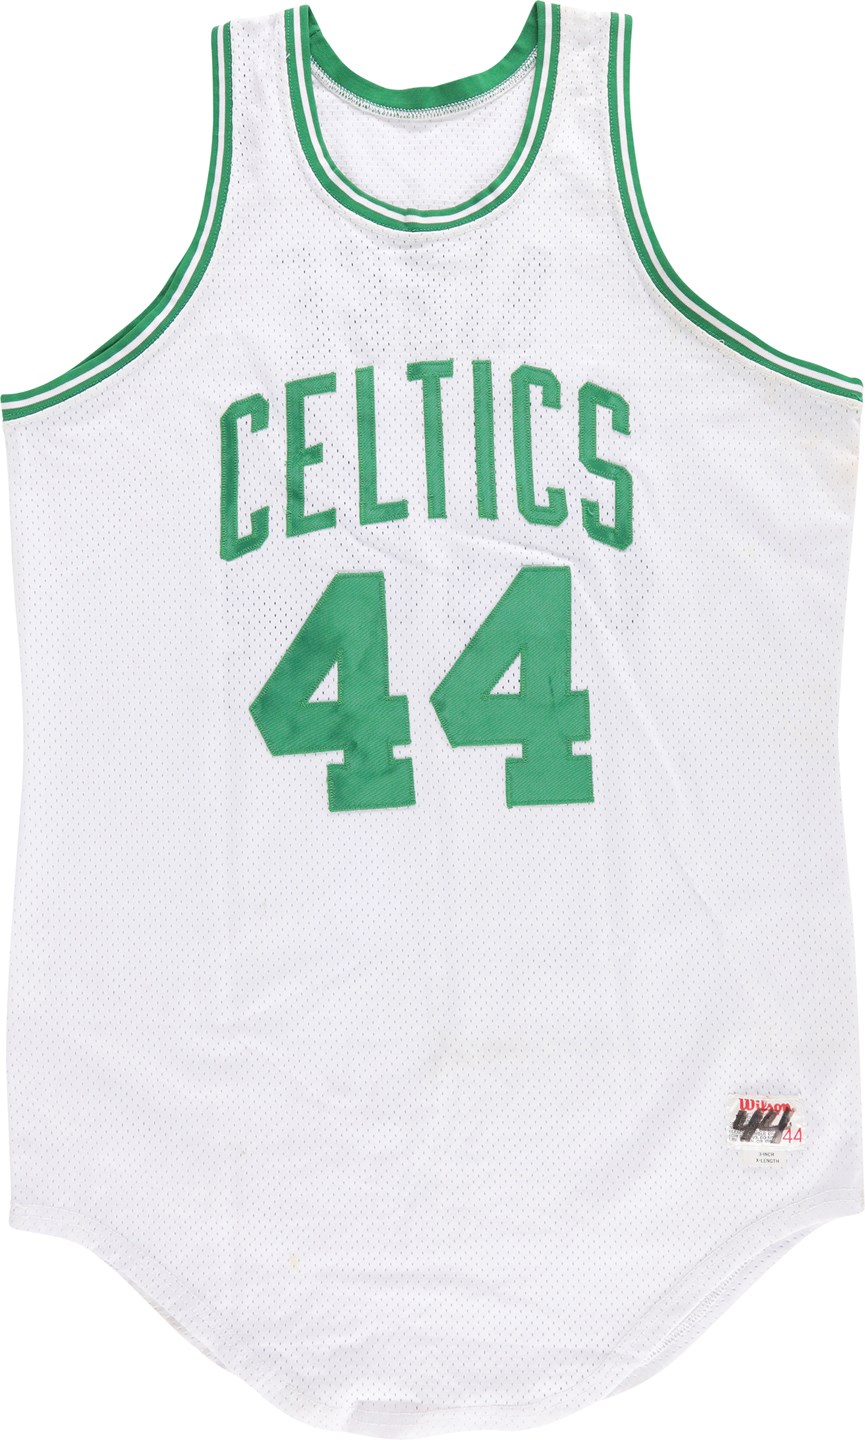 - 1985 Danny Ainge Boston Celtics Game Worn Preseason Jersey